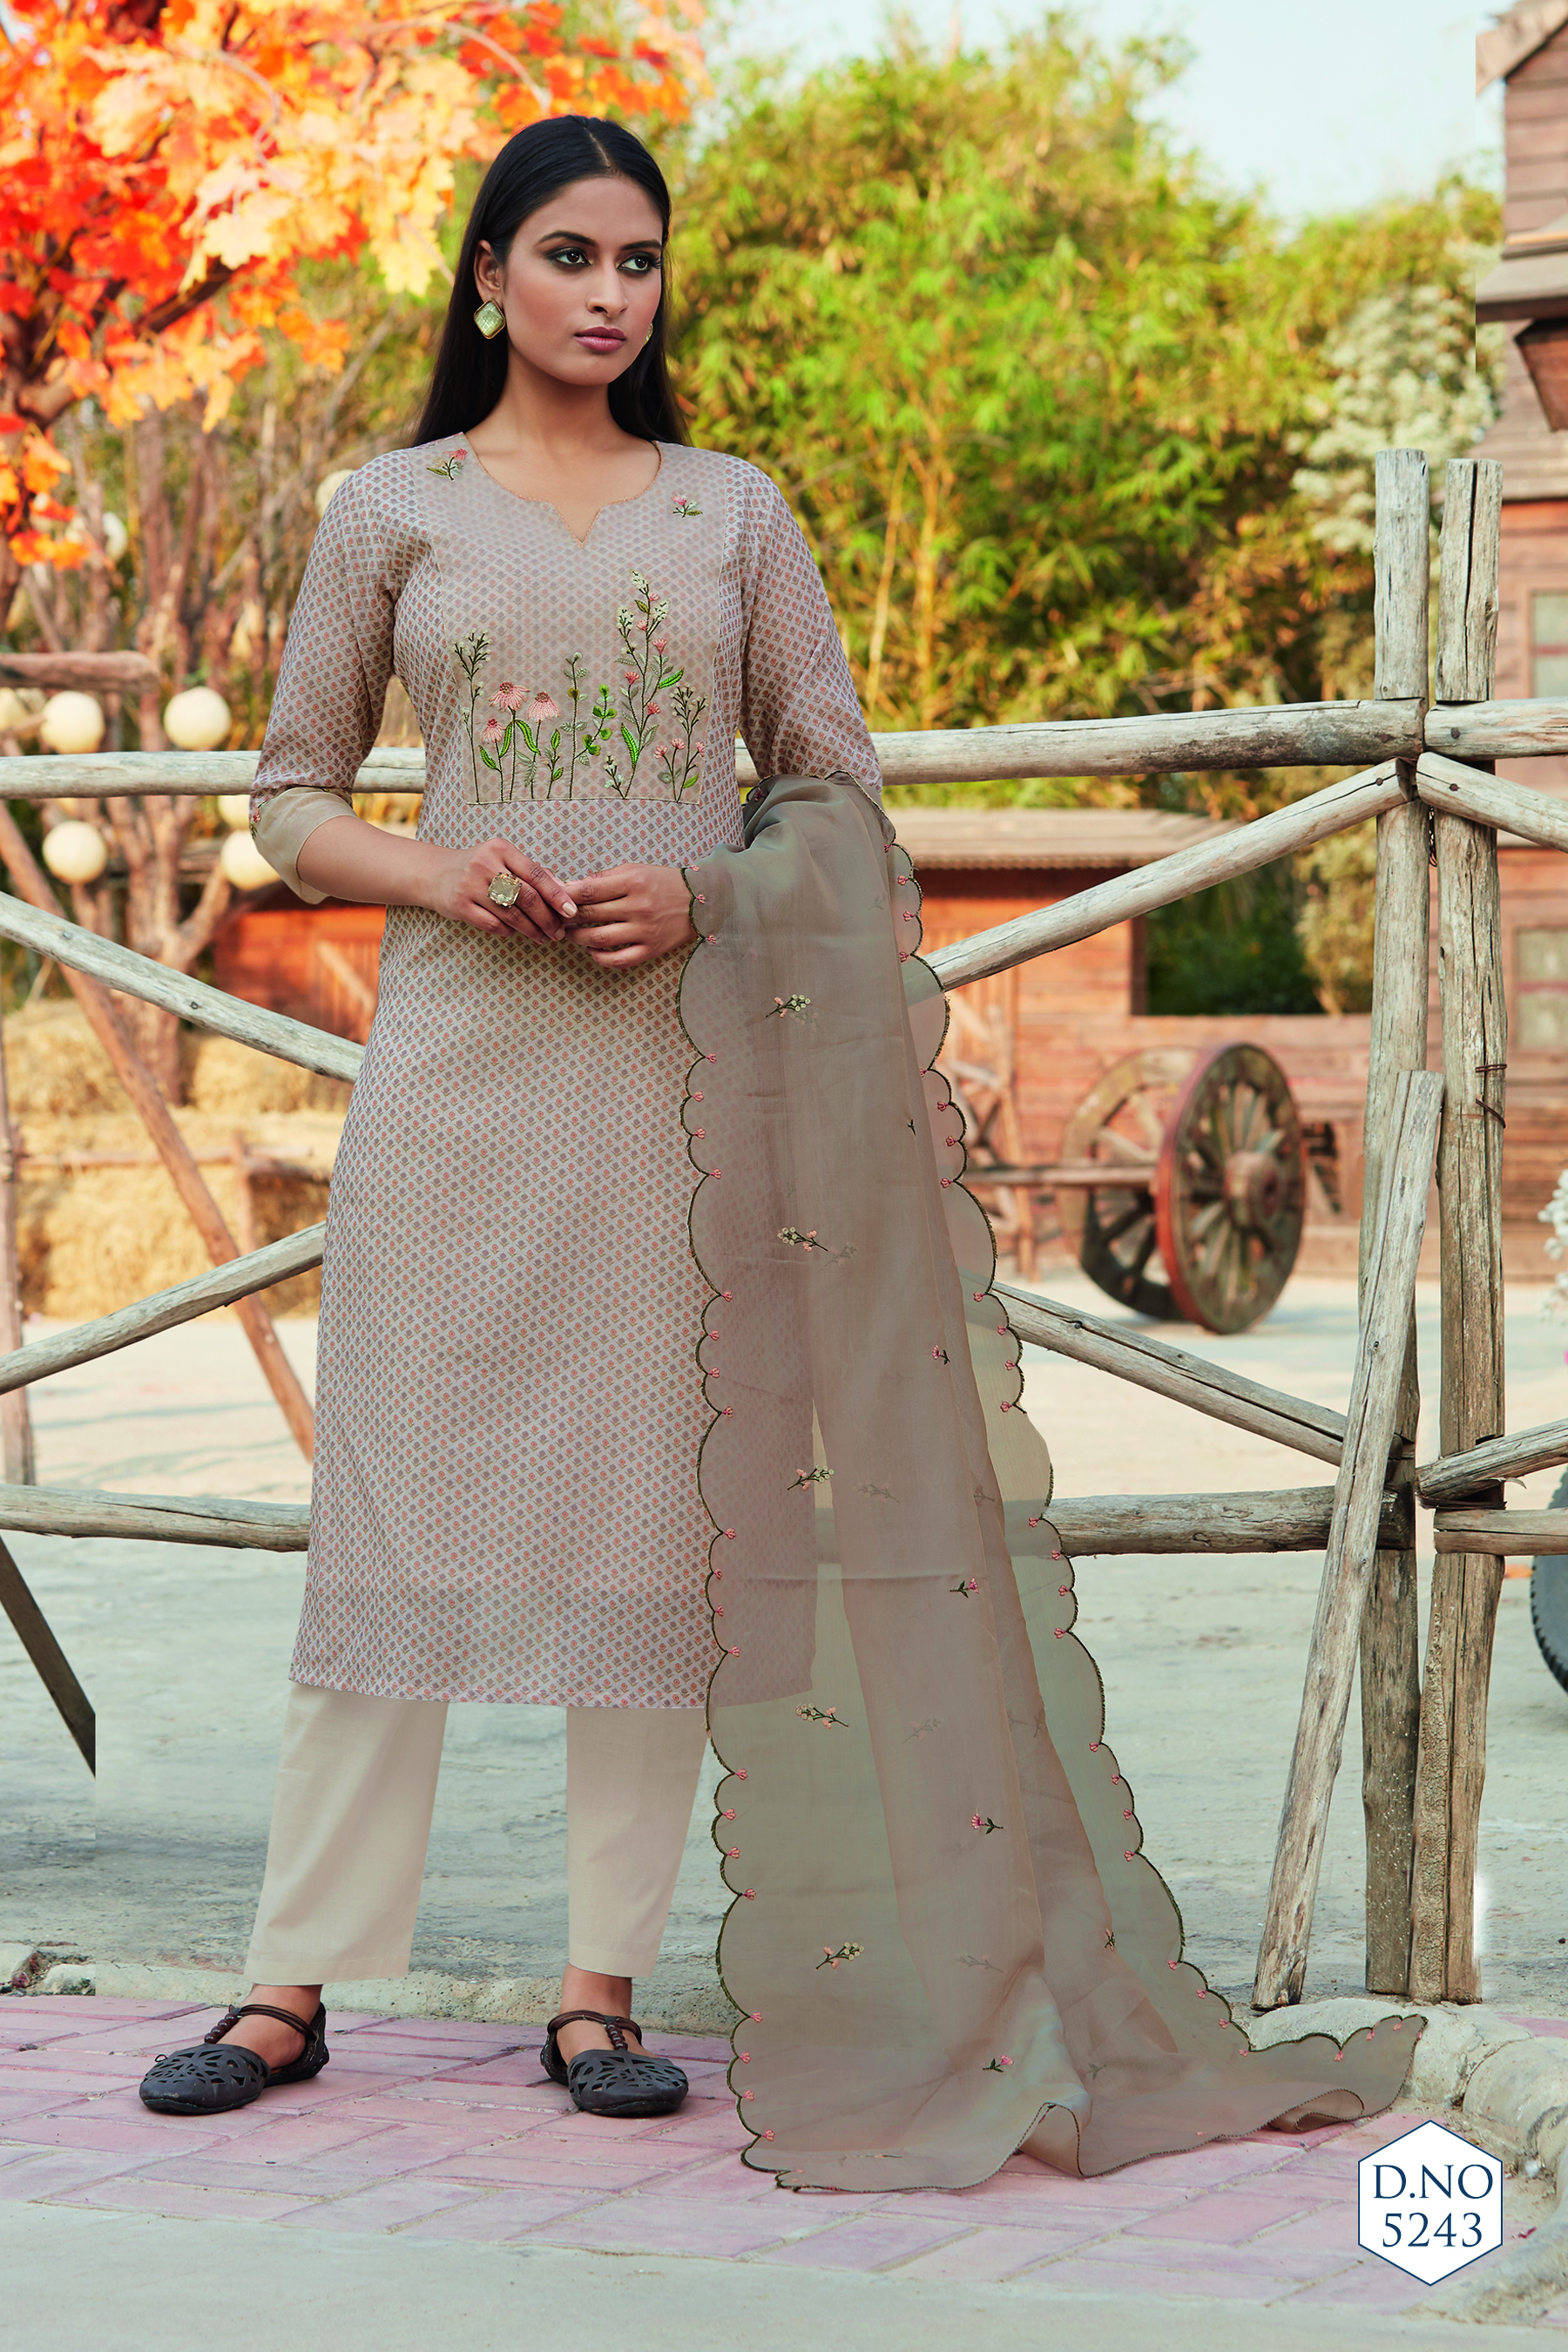 Women Woven Design Unstitched Salwar Suit Dress Material Fancy Wedding  Attire | eBay